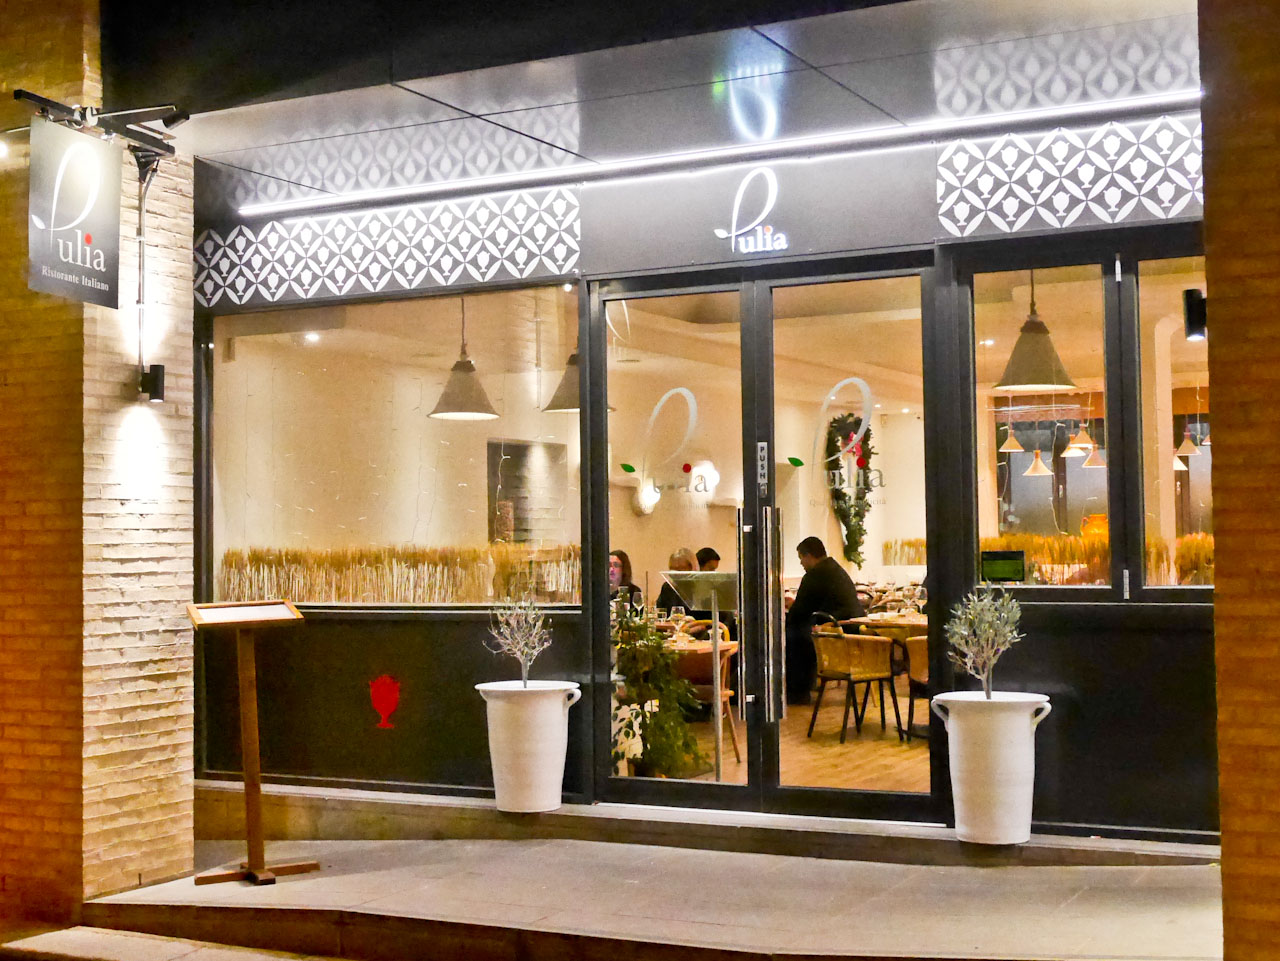 restaurant-review:-pulia,-borough-market,-london